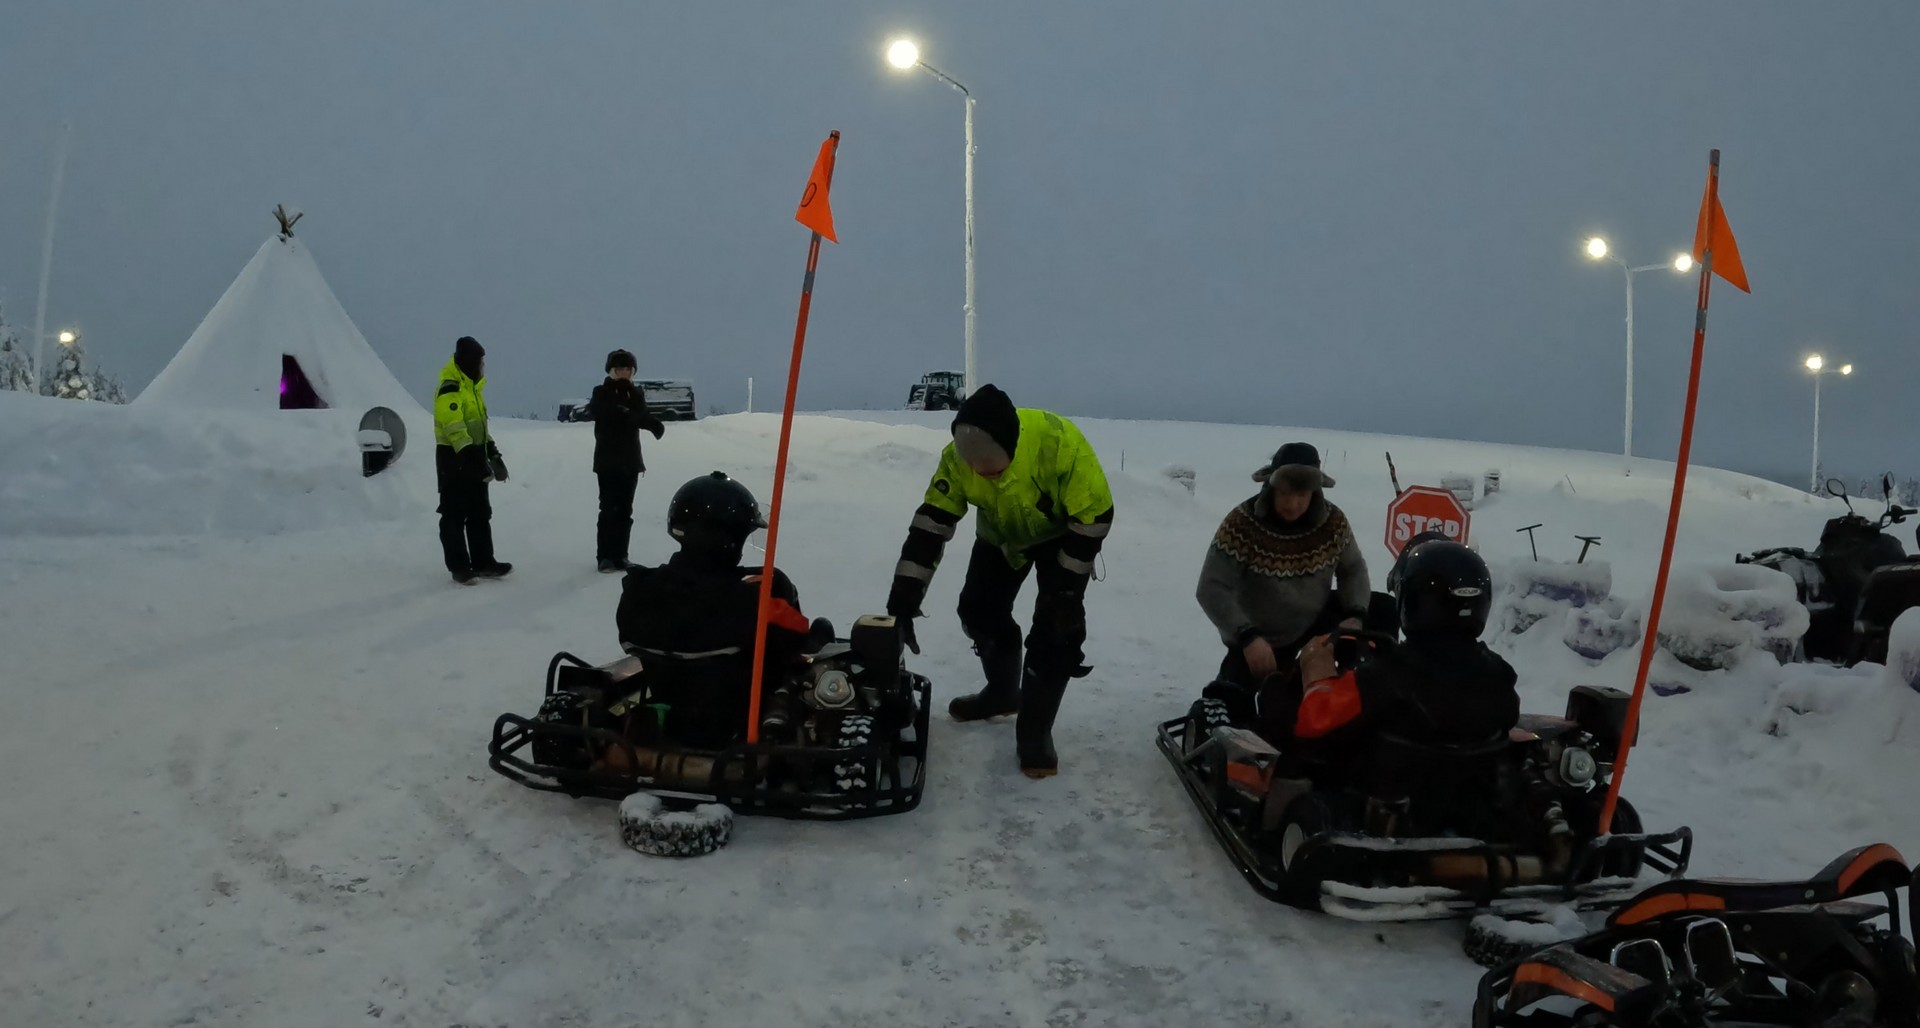 Staff readying the ice karters in Saariselka, Finland. Frozen karting & husky rides